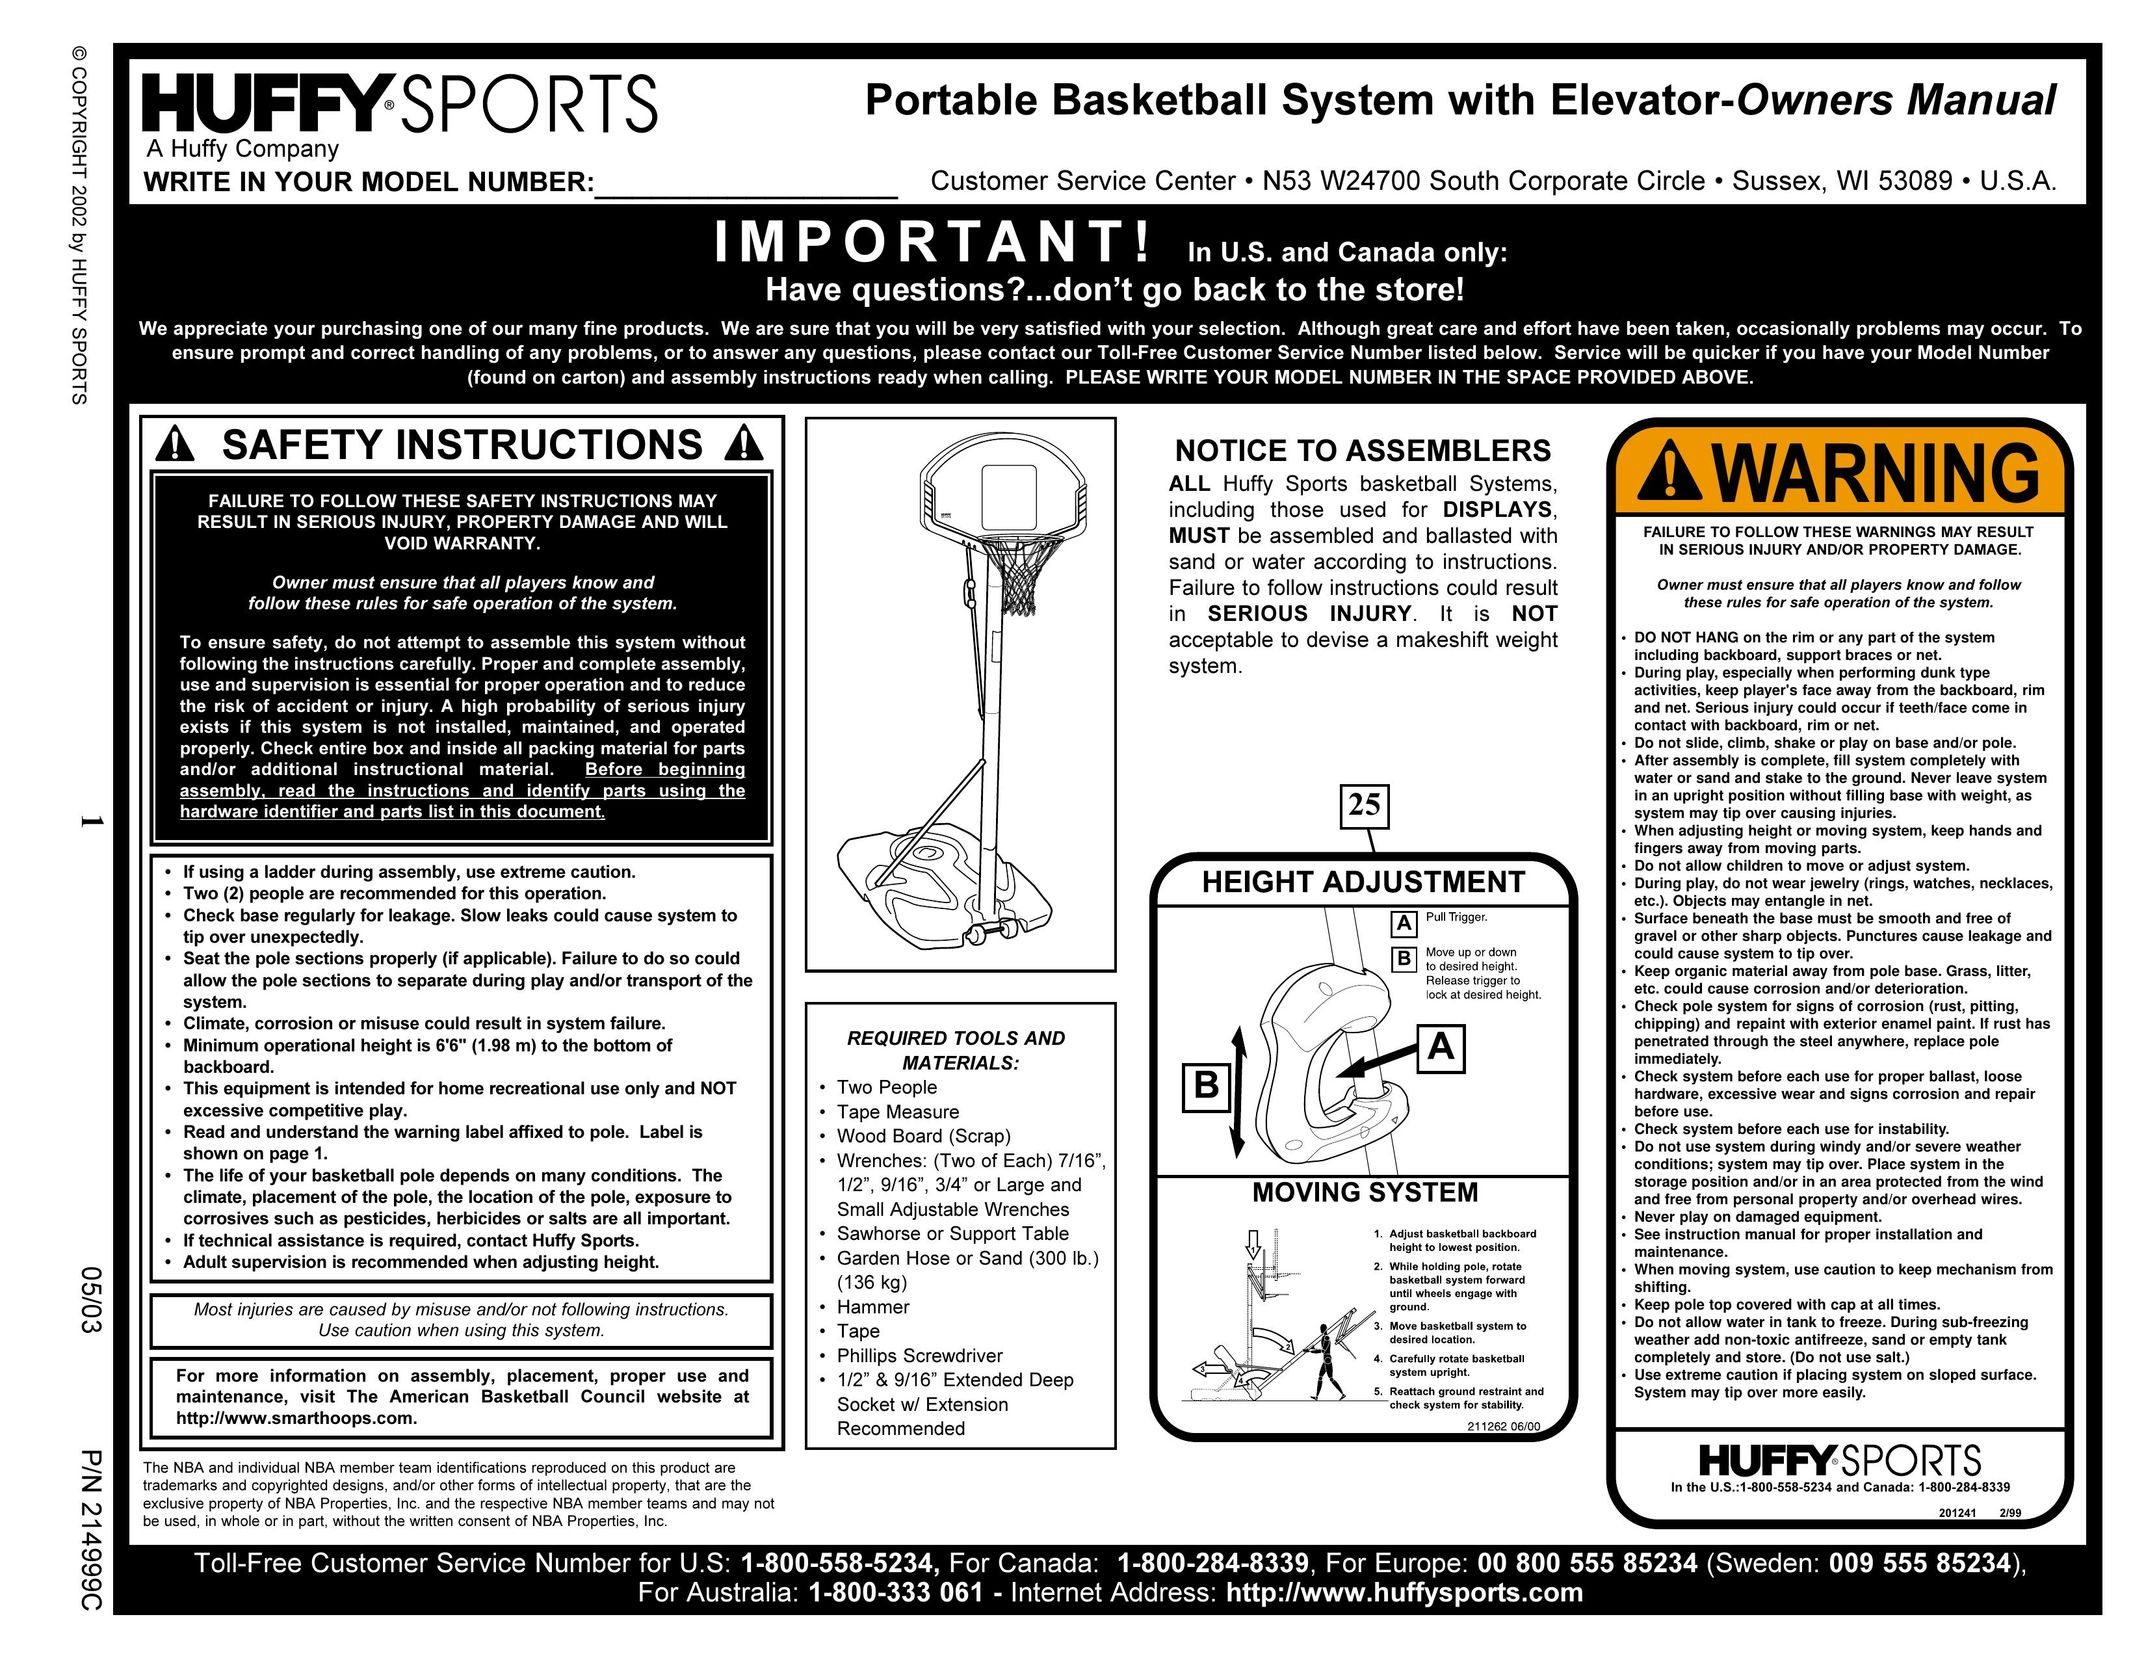 Huffy WI53089 Board Games User Manual